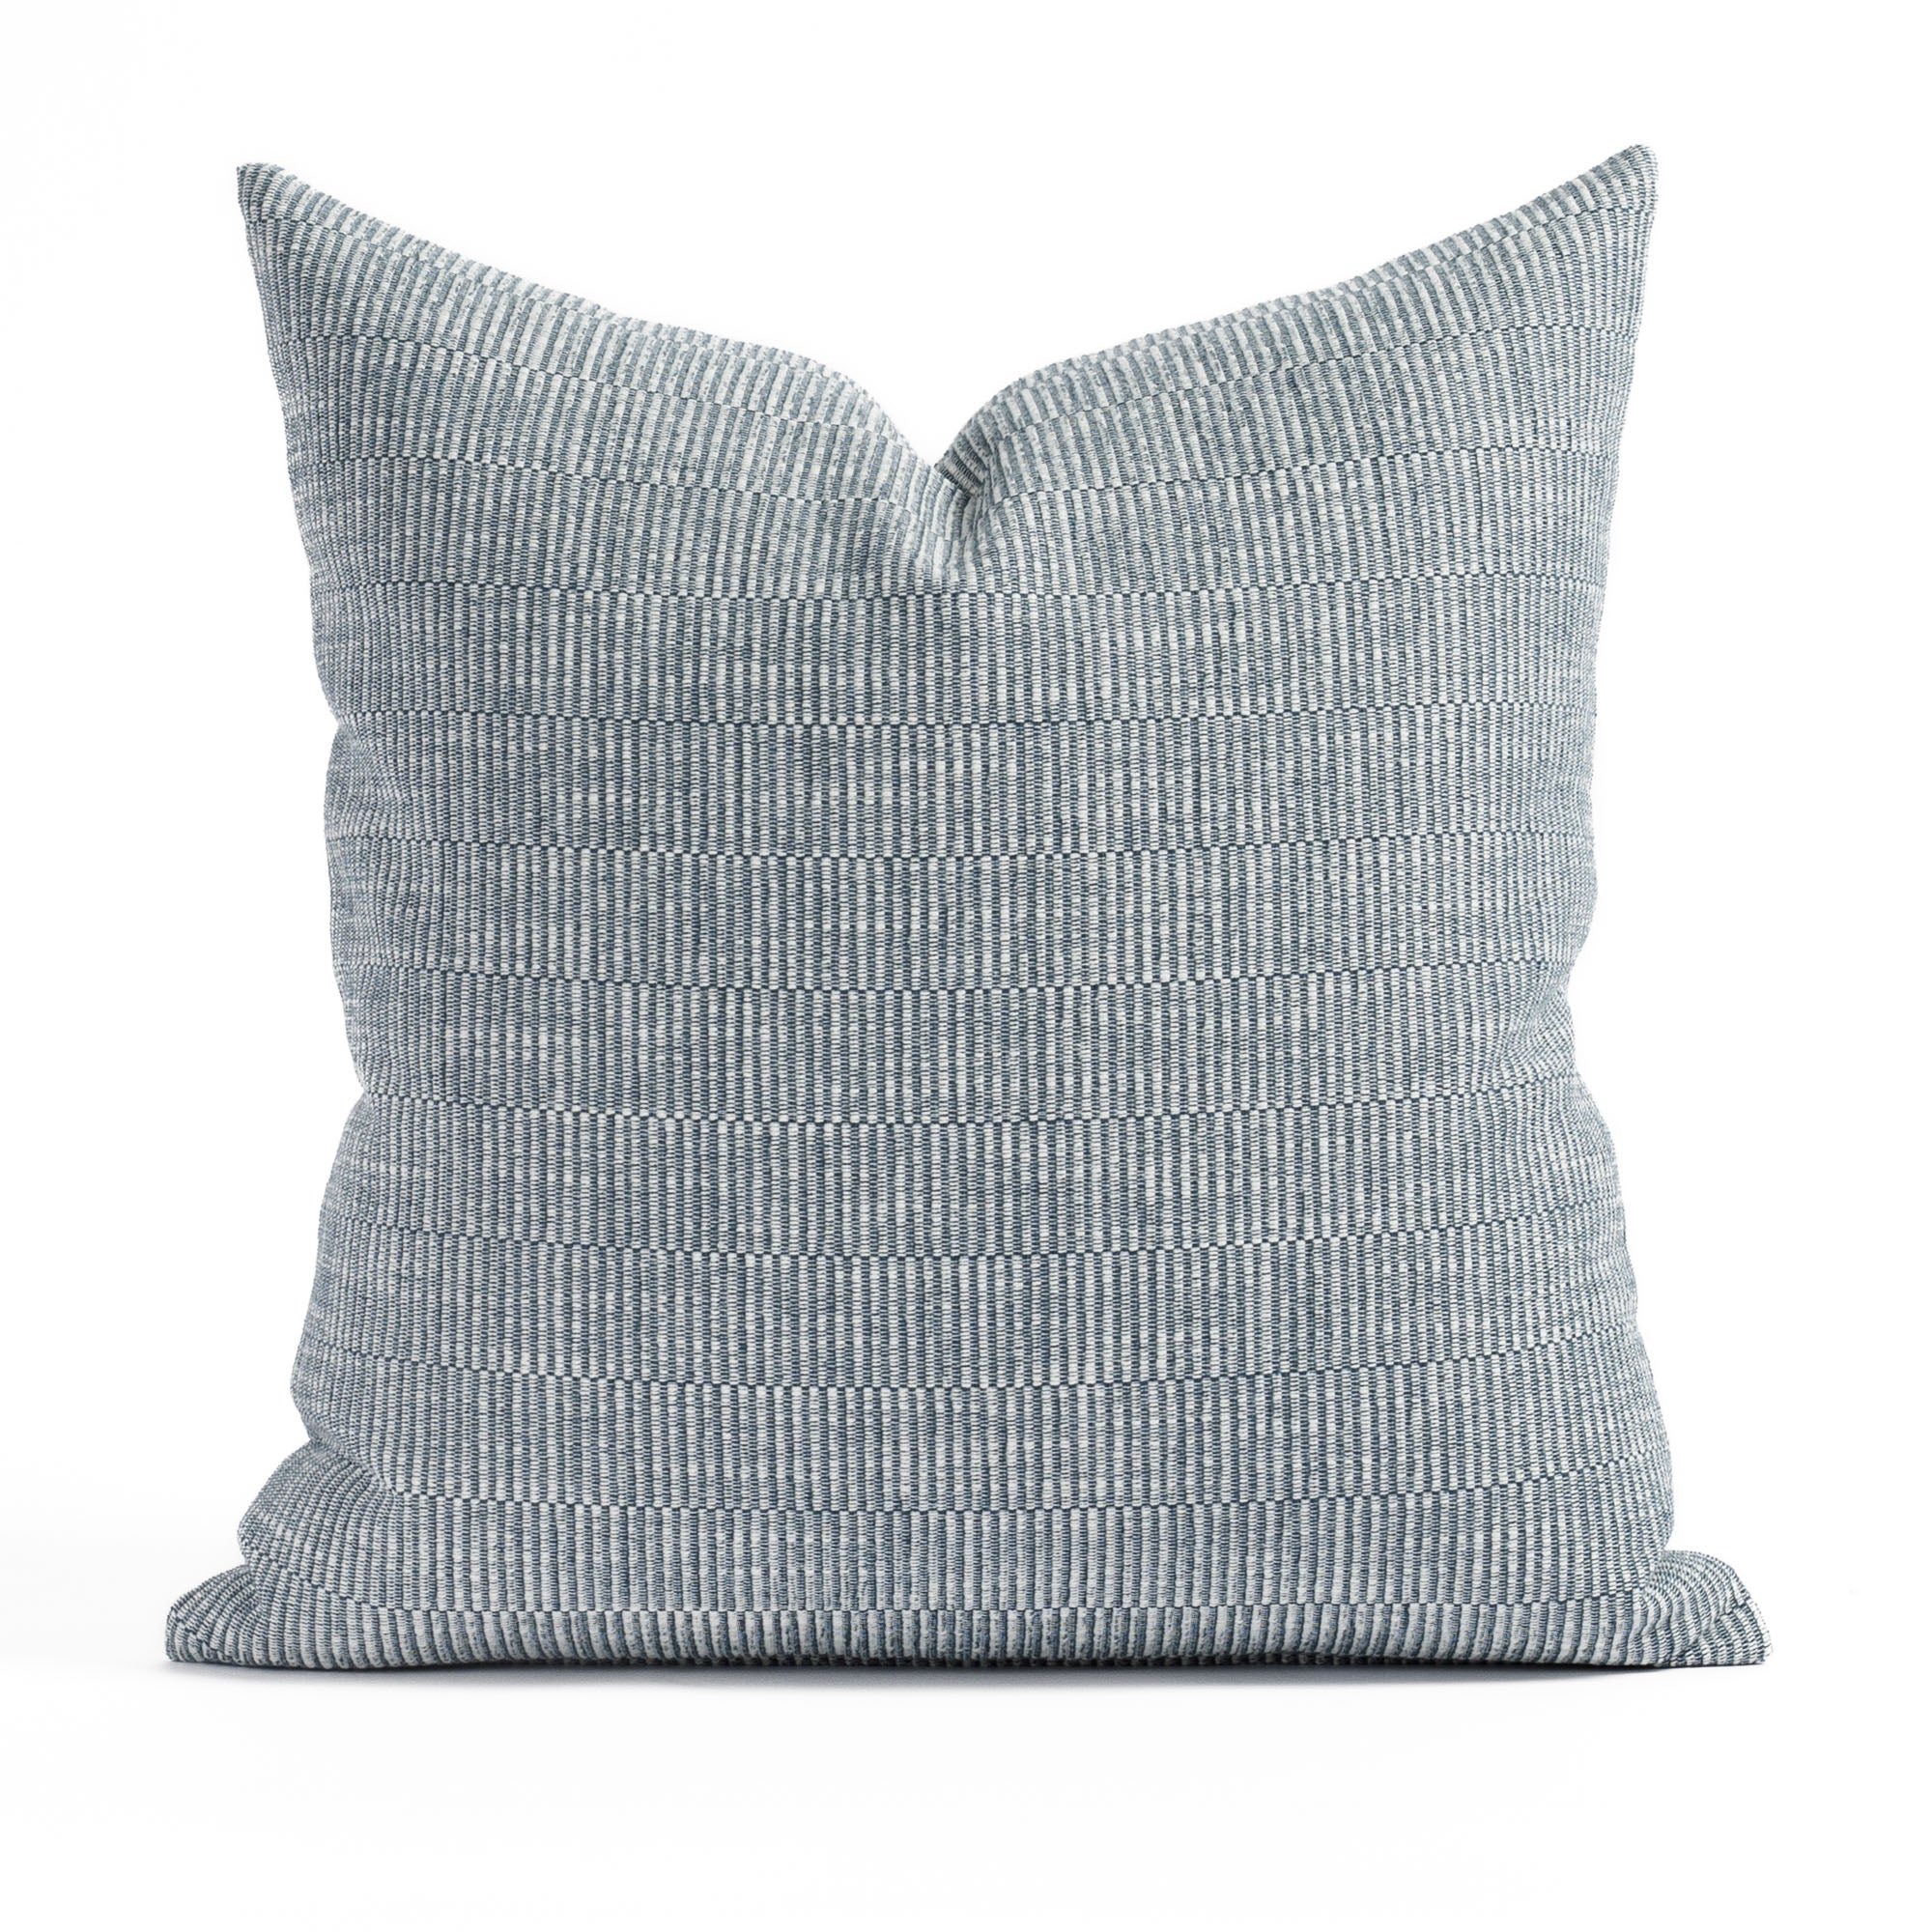 Lane 20x20 Pillow Chambray, a blue tonal stripe throw pillow from Tonic Living